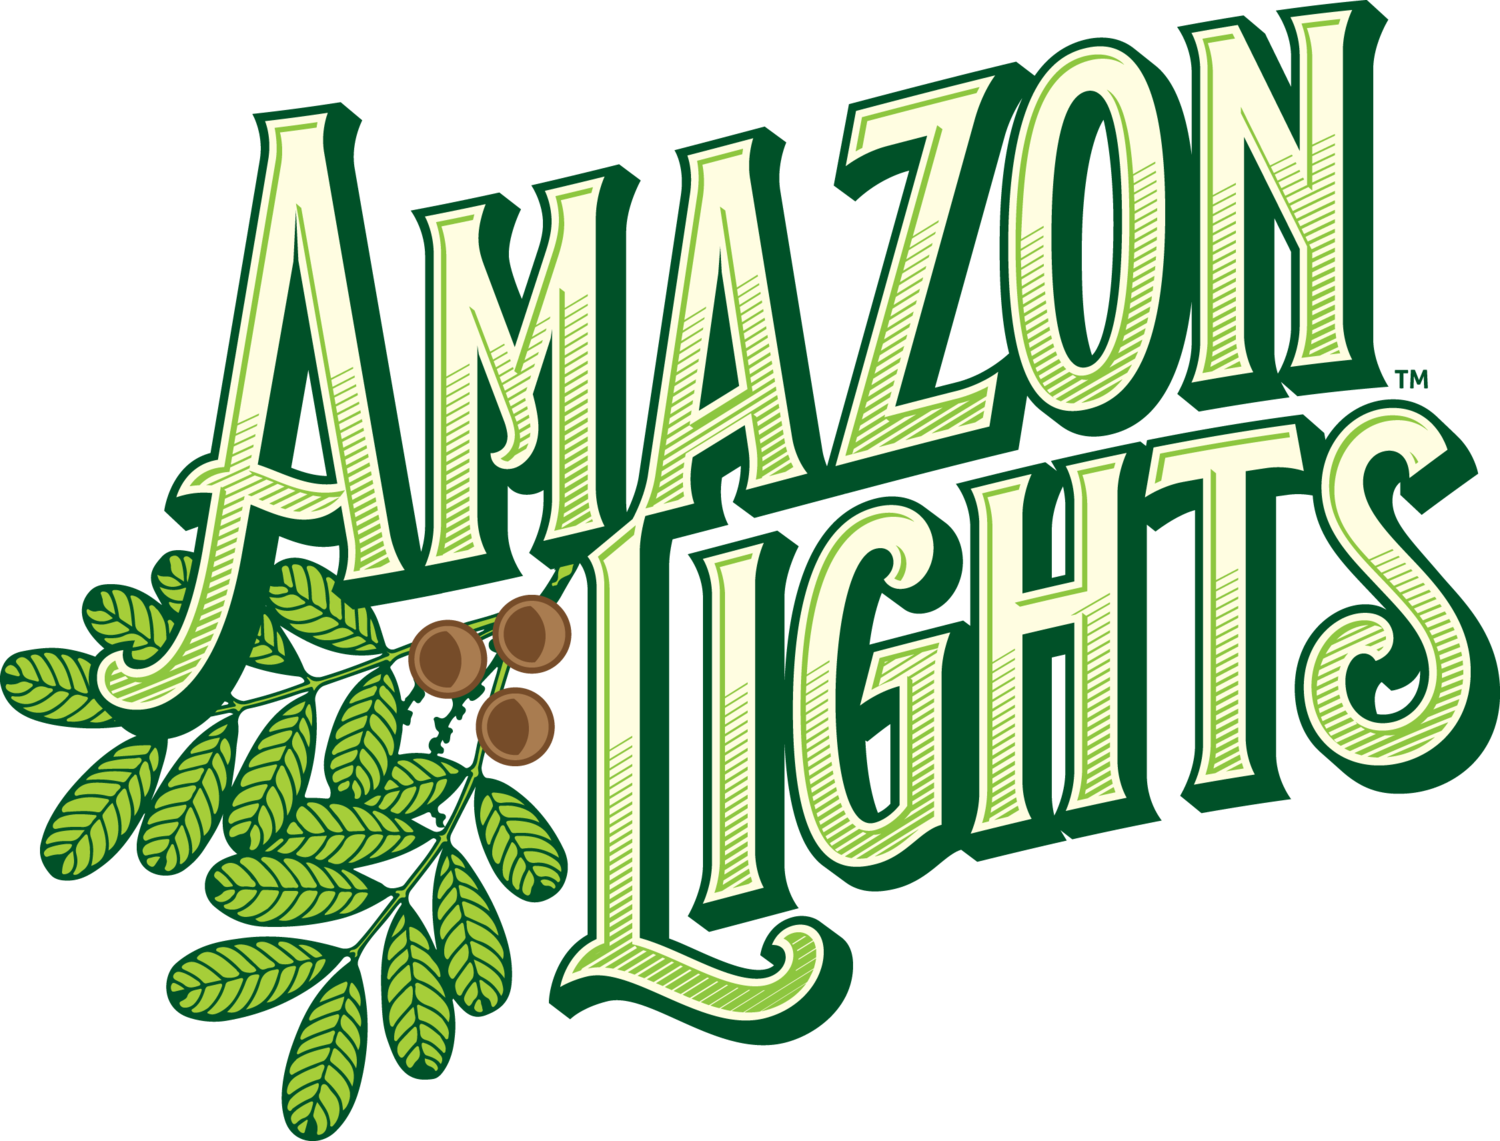 Amazon Lights